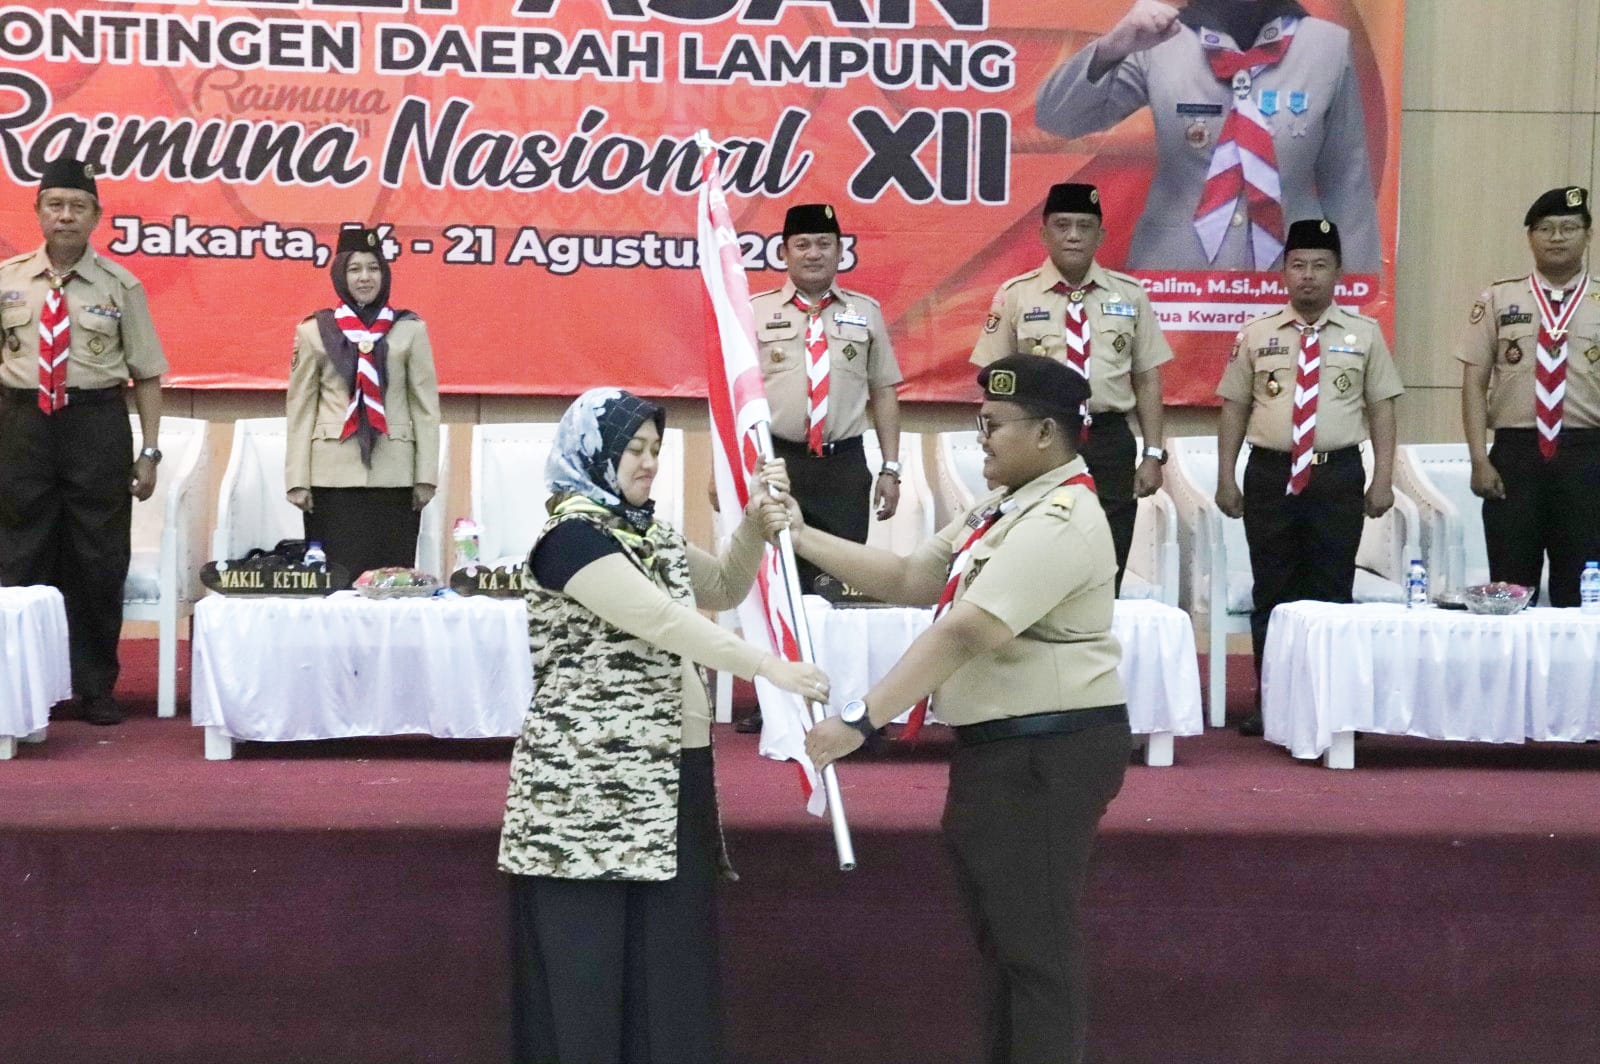 Chusnunia Chalim Melepas Kontingen Lampung Mengikuti Raimuna Nasional XII Cibubur